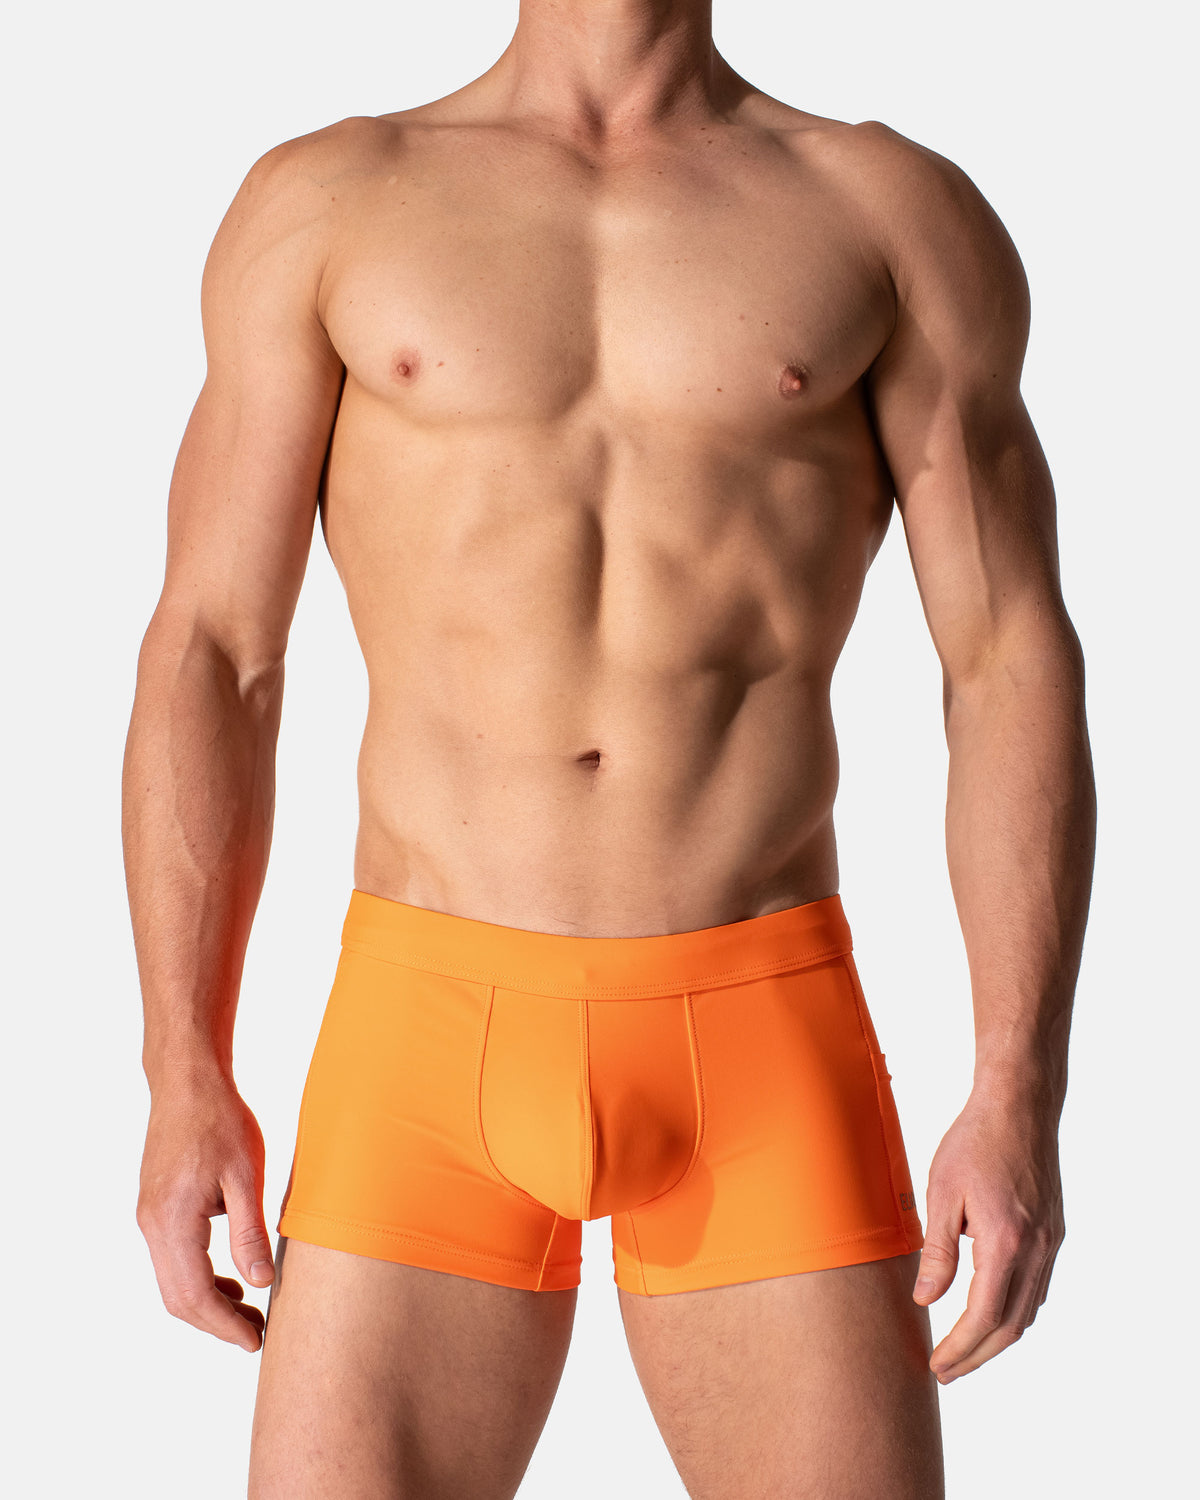 JDEFEG Bathing Suit Boy Shorts for Women Plus Size Solid&Hight